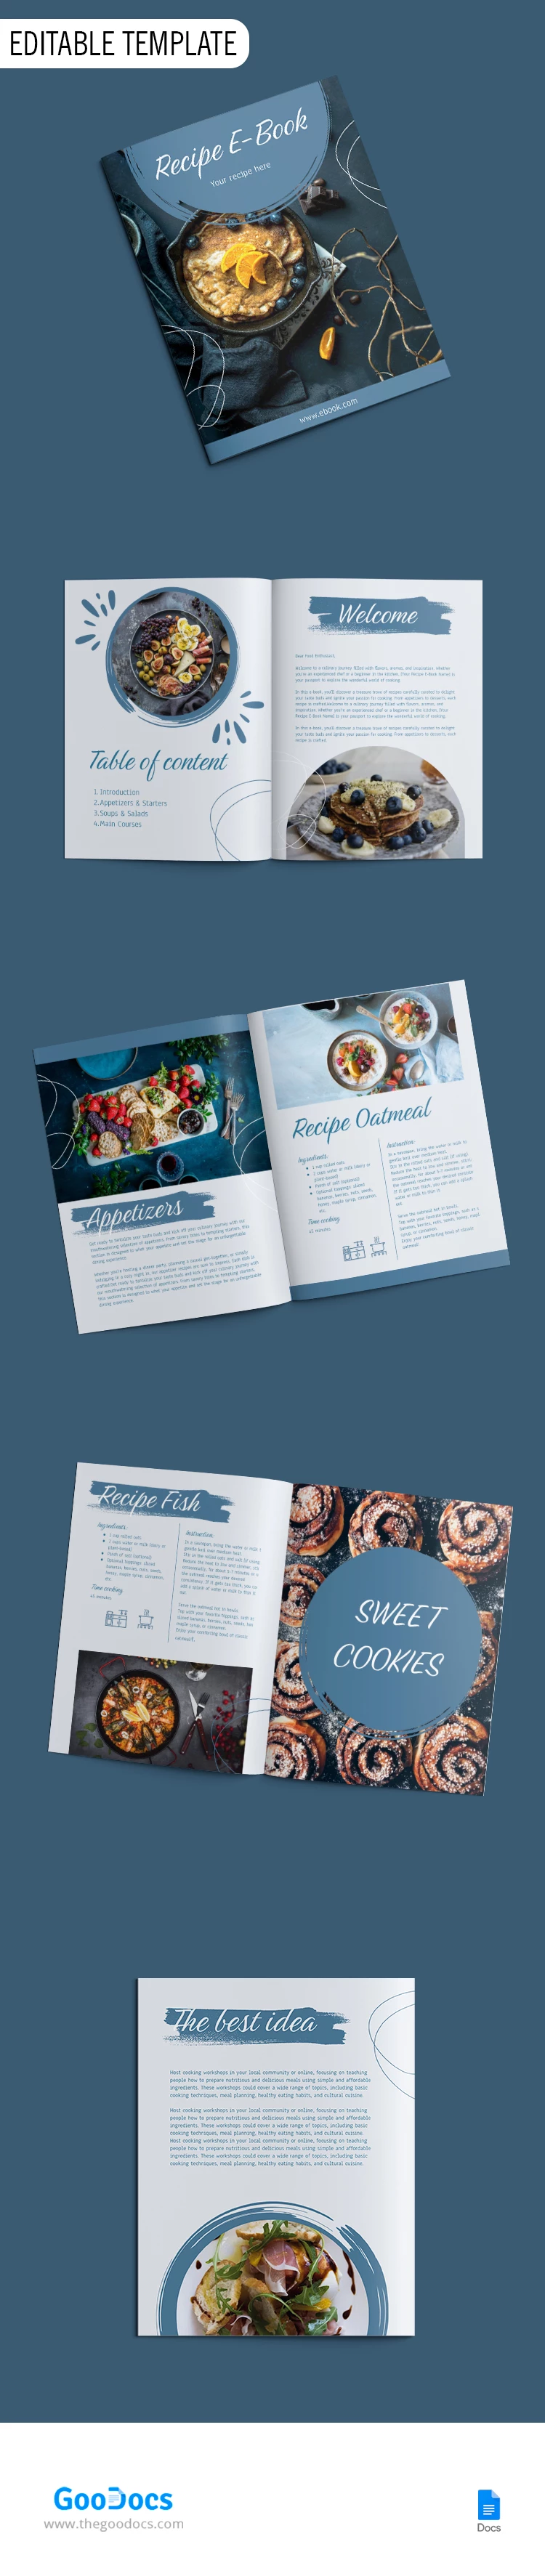 Libro di cucina blu - free Google Docs Template - 10068592